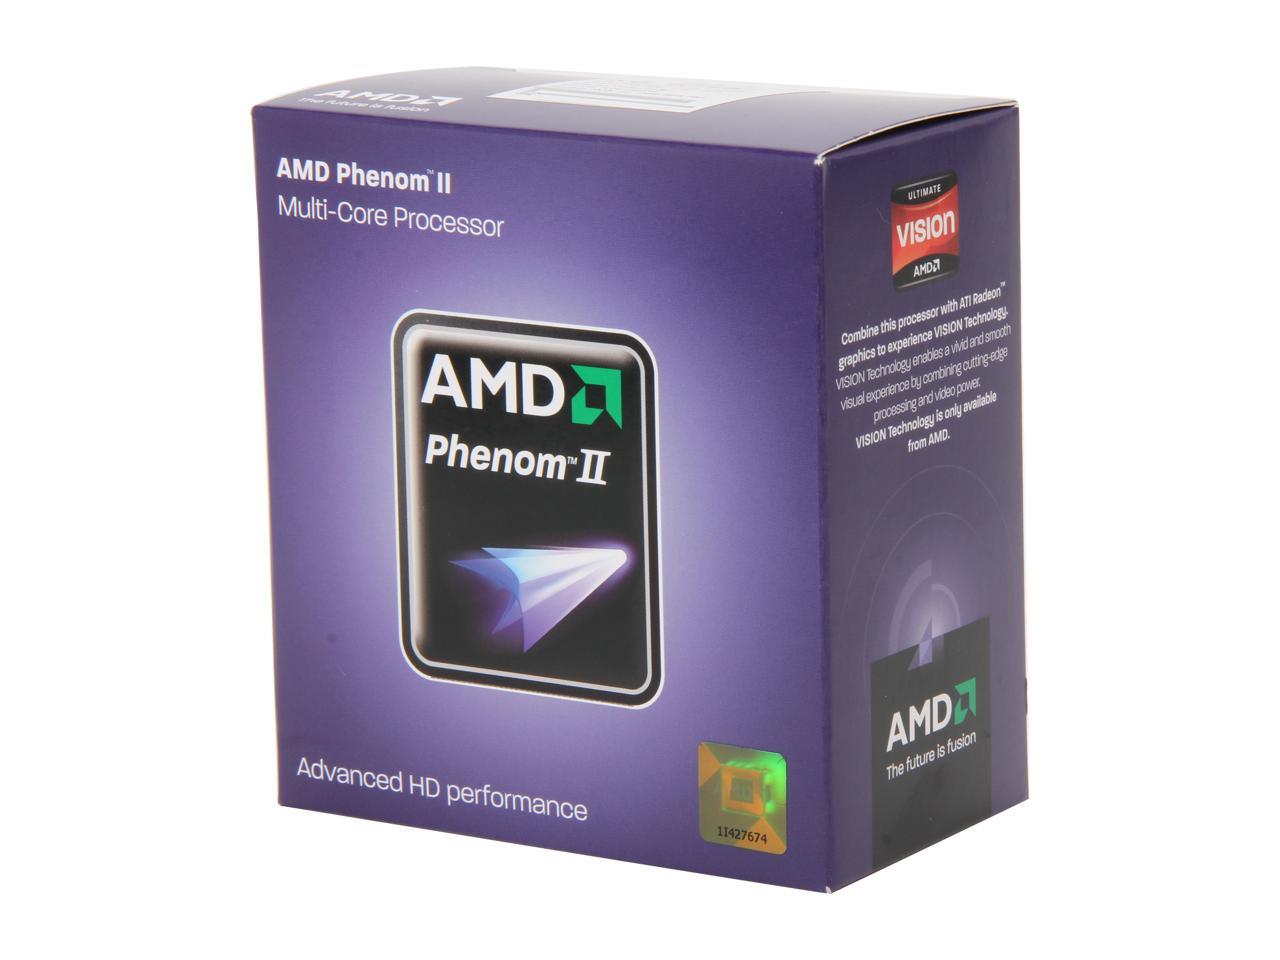 Amd phenom tm ii x6 processor. AMD Phenom II x4 960. AMD Phenom II x6 1045t. AMD Phenom x4 970. AMD Phenom II x4 960t be.